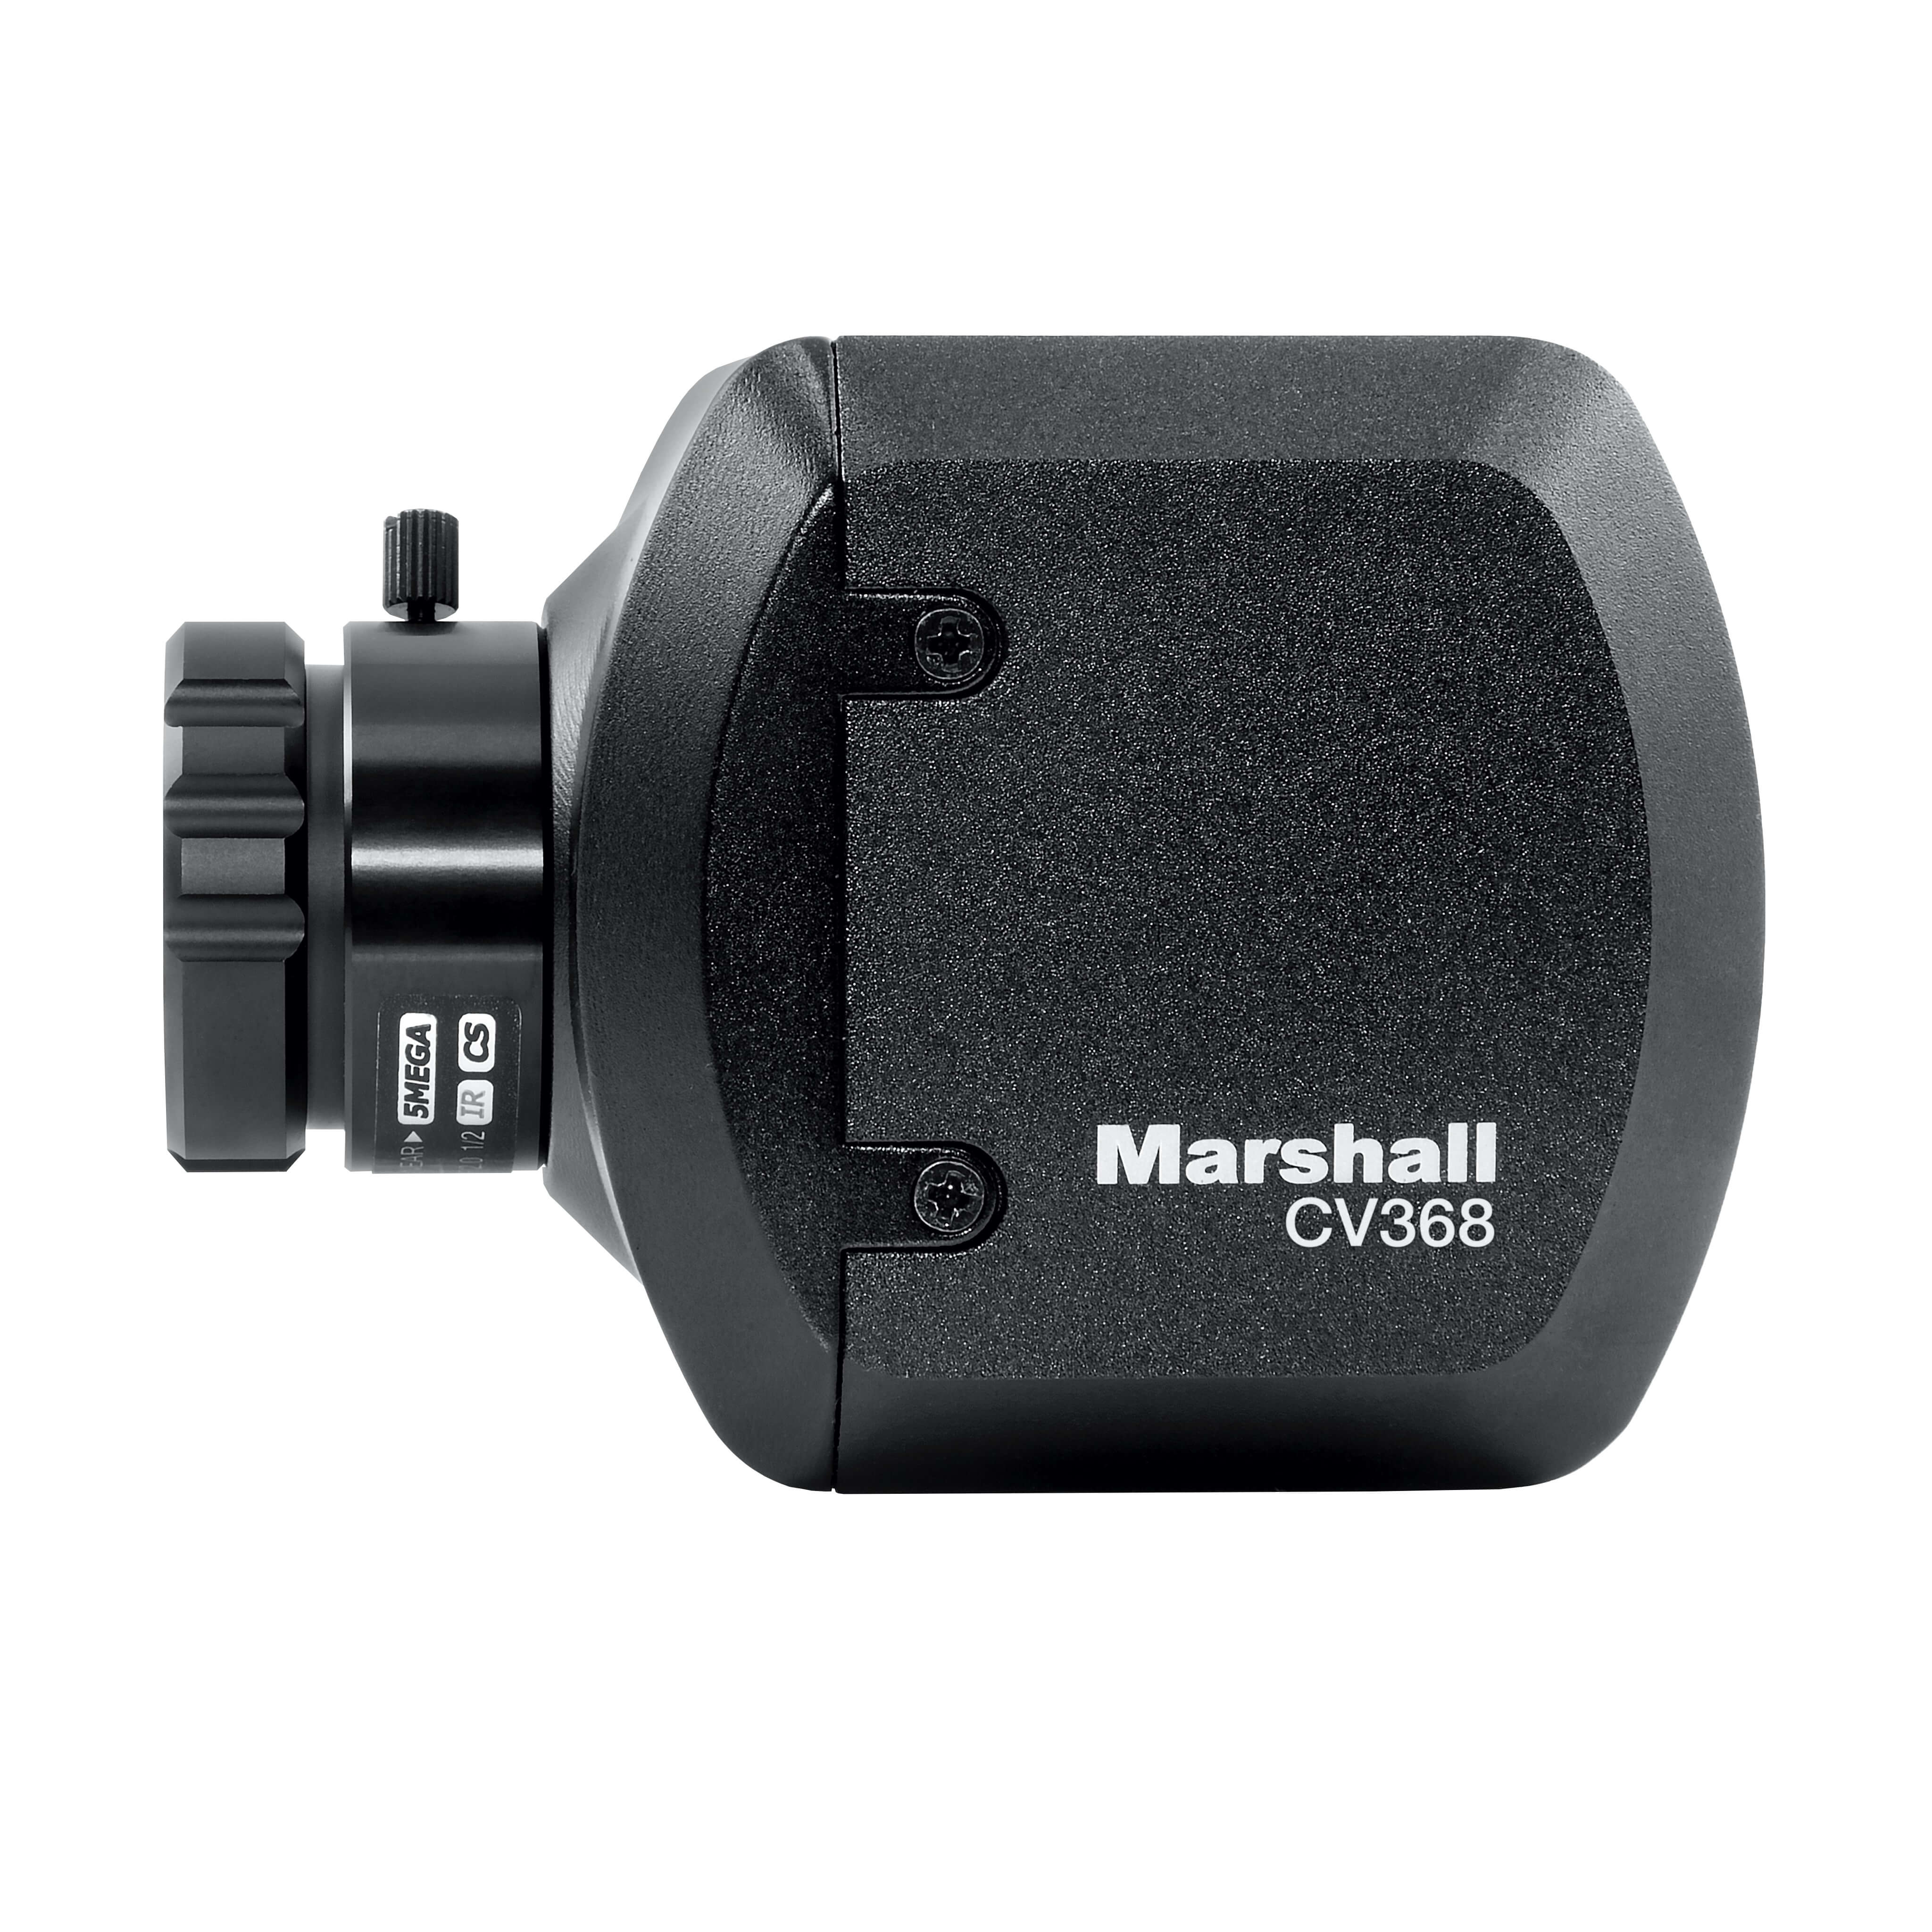 Marshall CV368 - Compact Global HD Camera with Genlock 3G-SDI and HDMI, left side